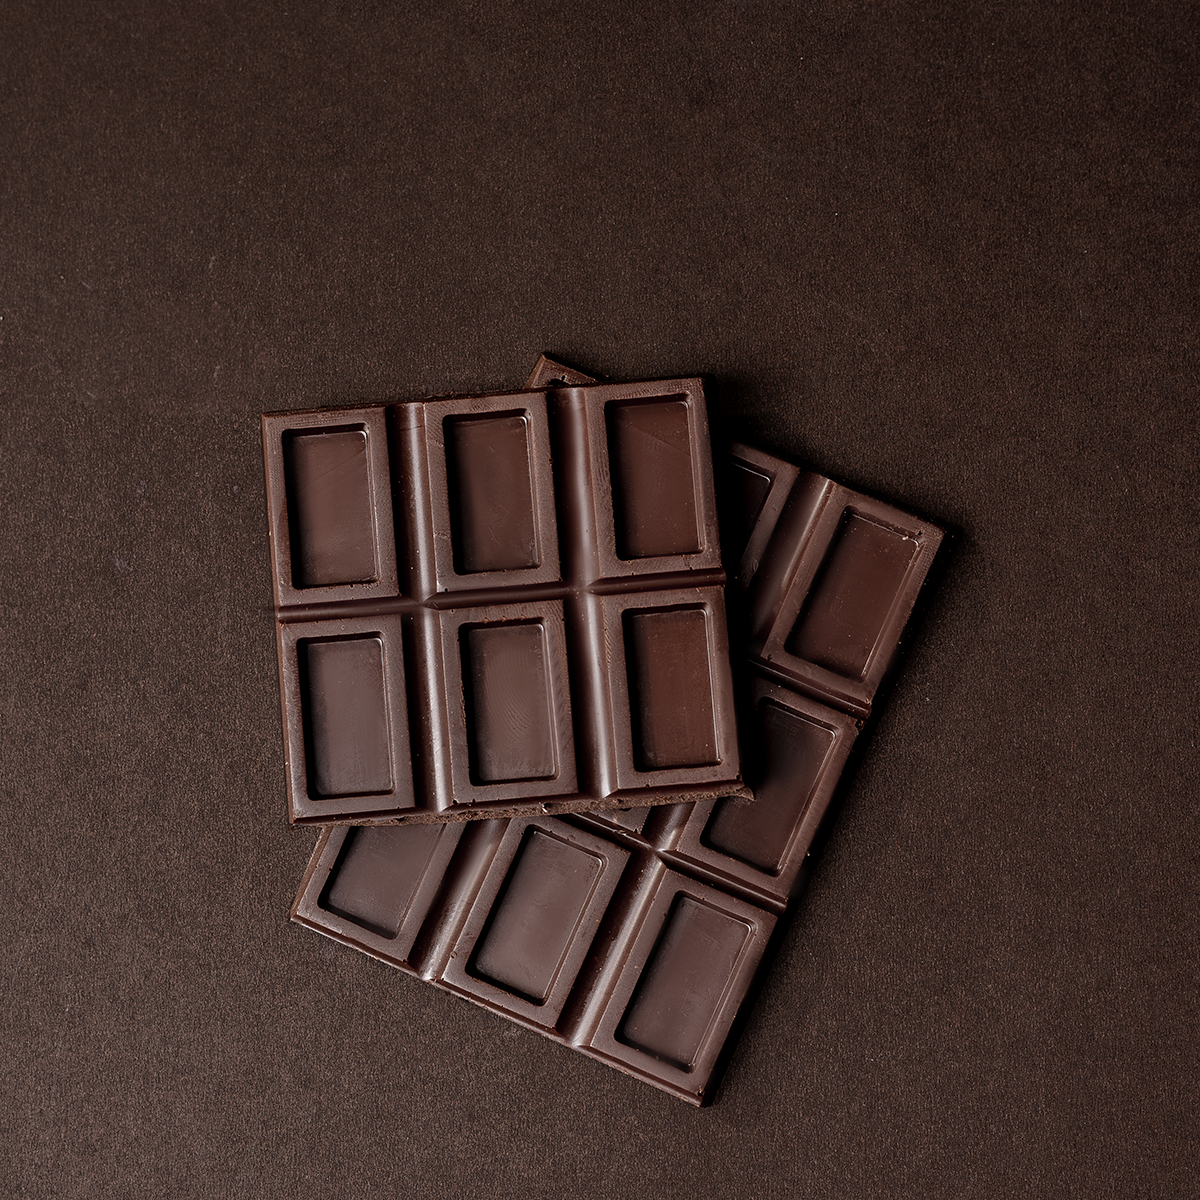 55% Dark Chocolate Bar